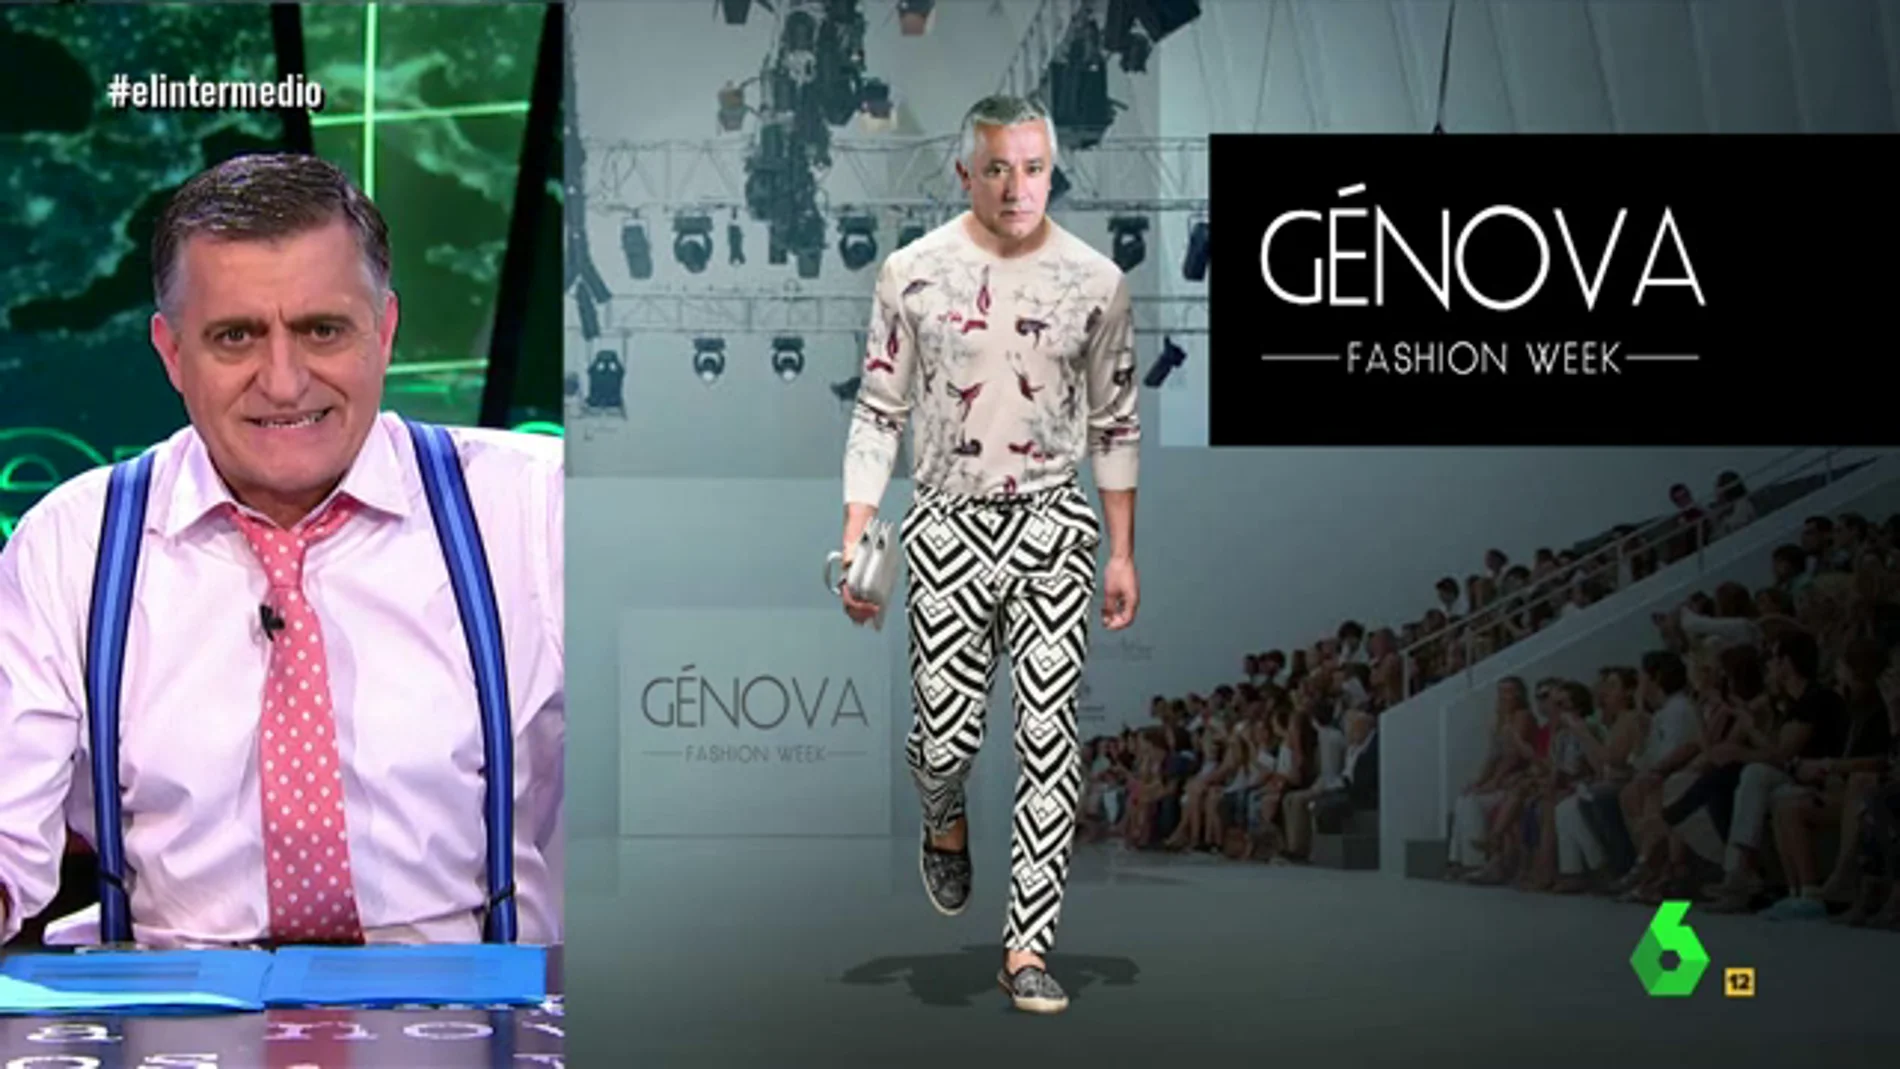 Génova, fashion week en El Intermedio